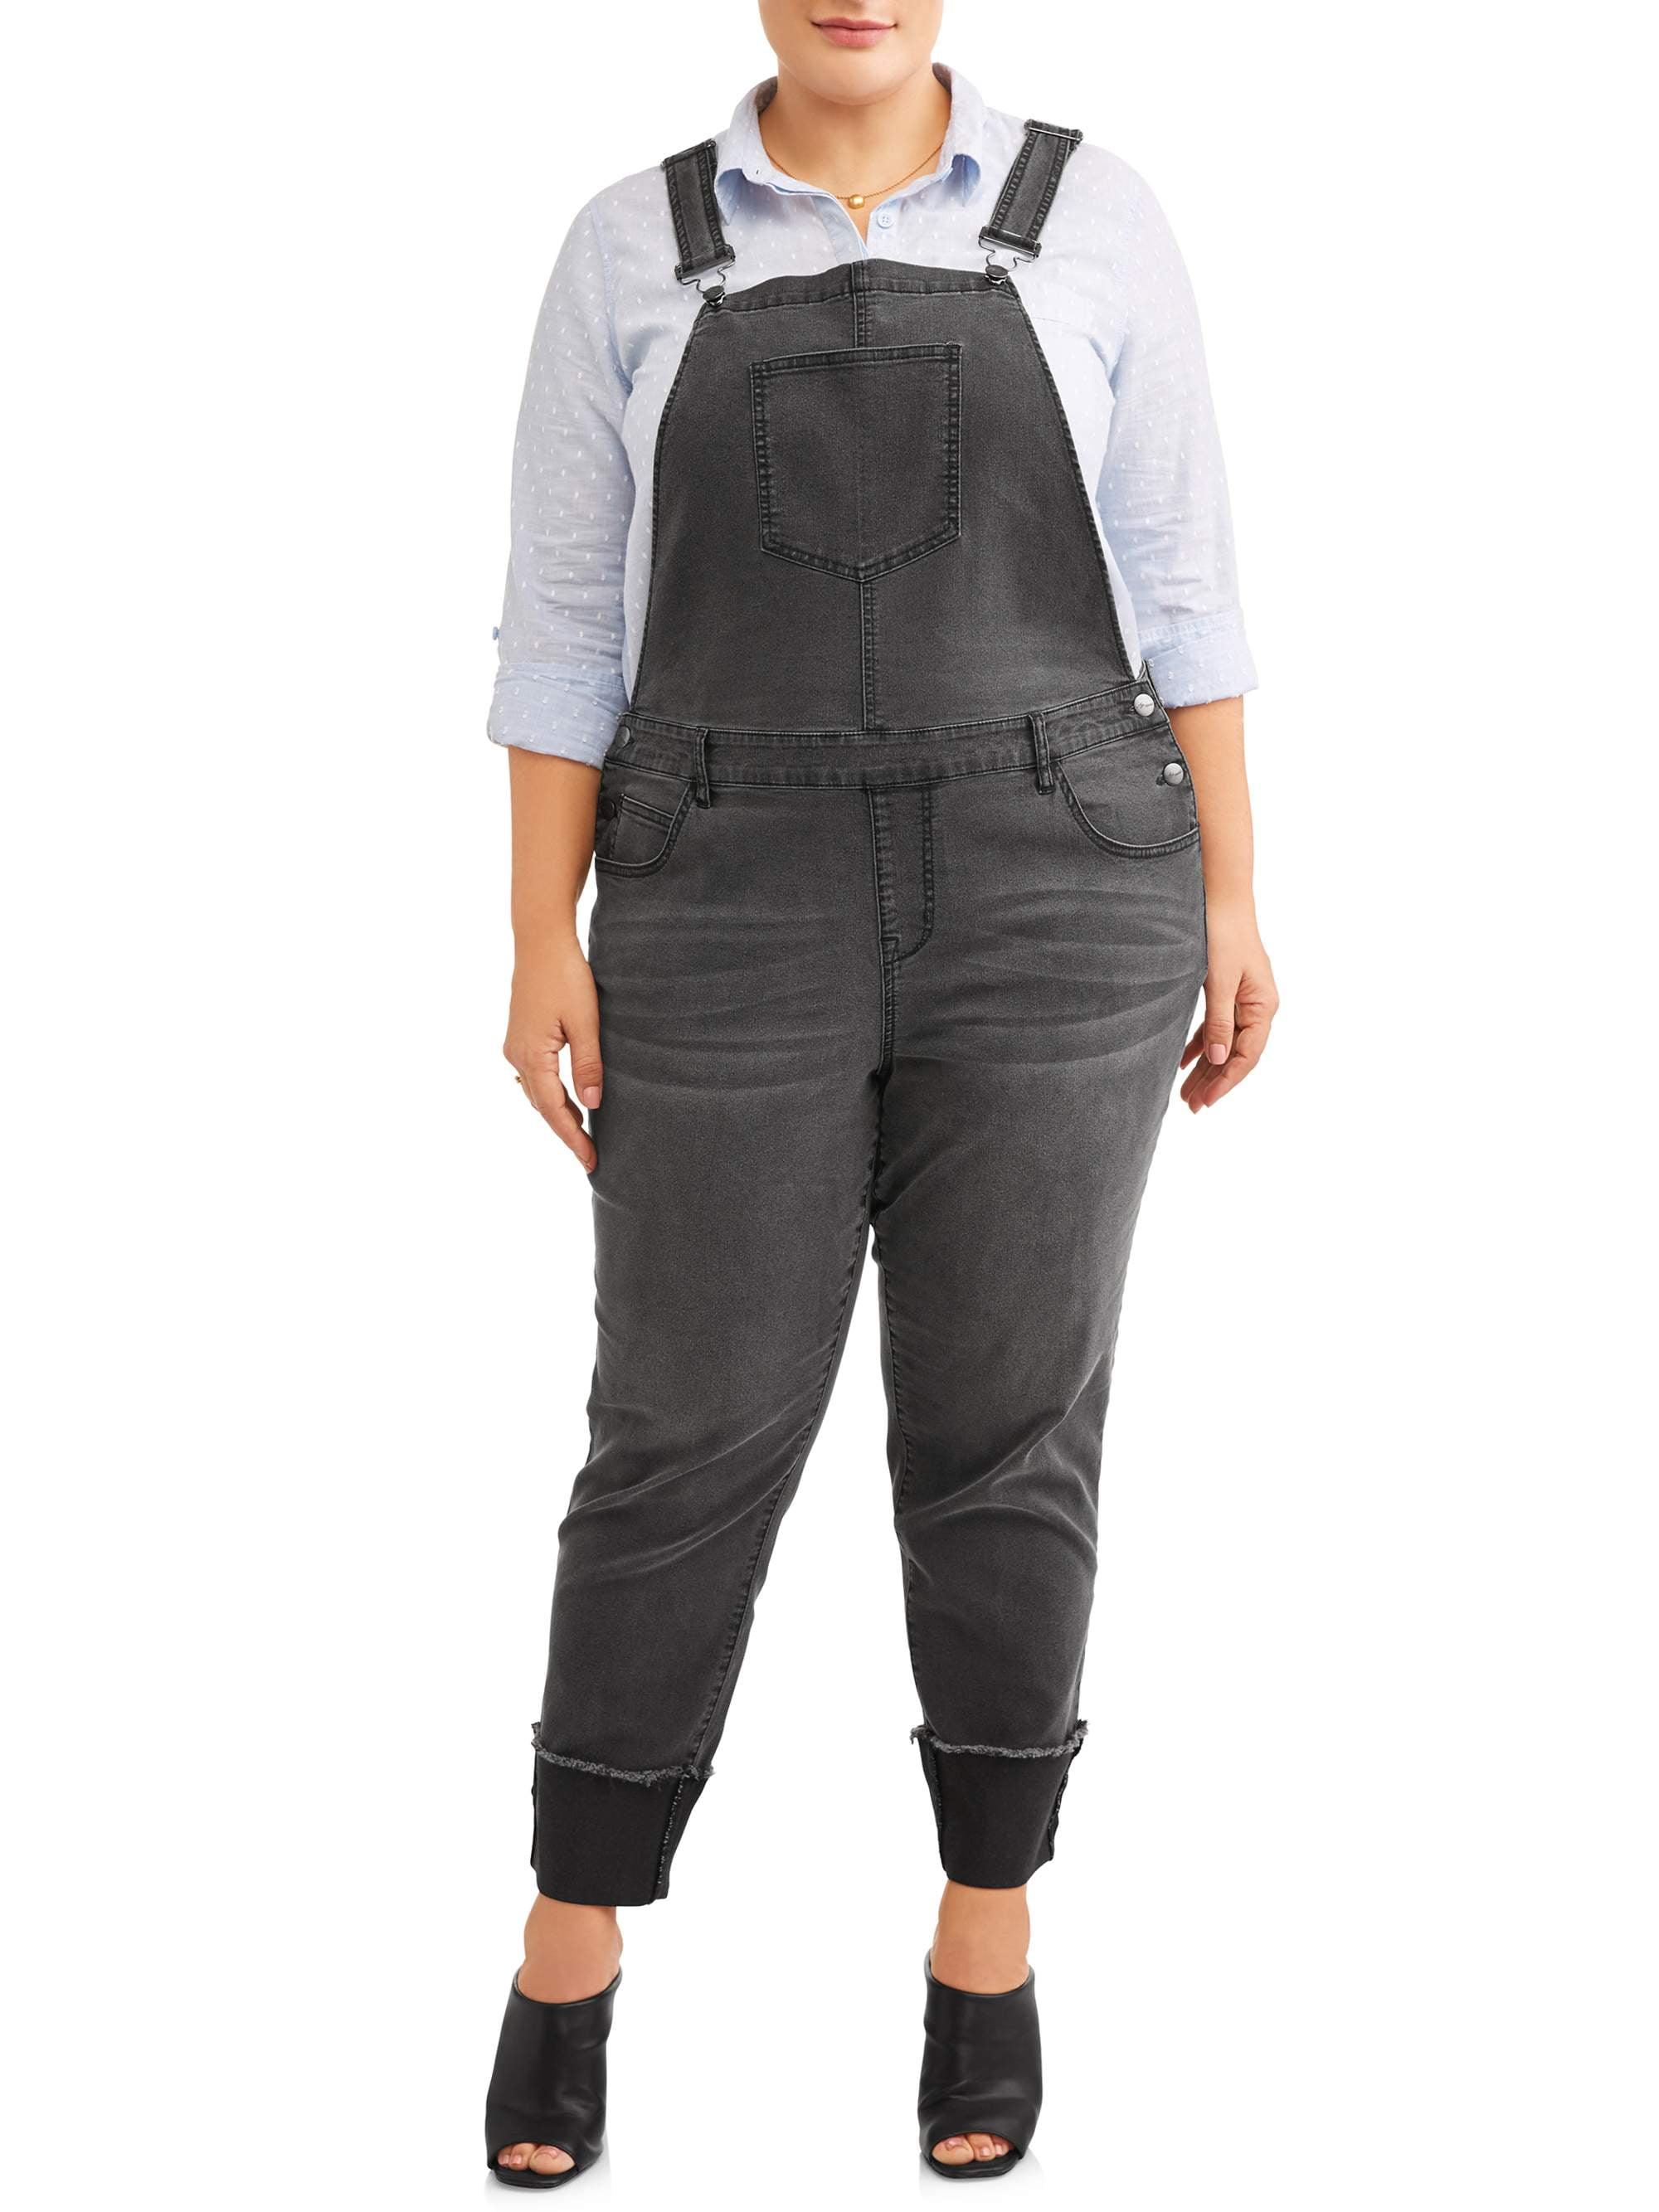 A3 Denim Women's Plus Size Stretch Denim Overalls Cuffs - Walmart.com